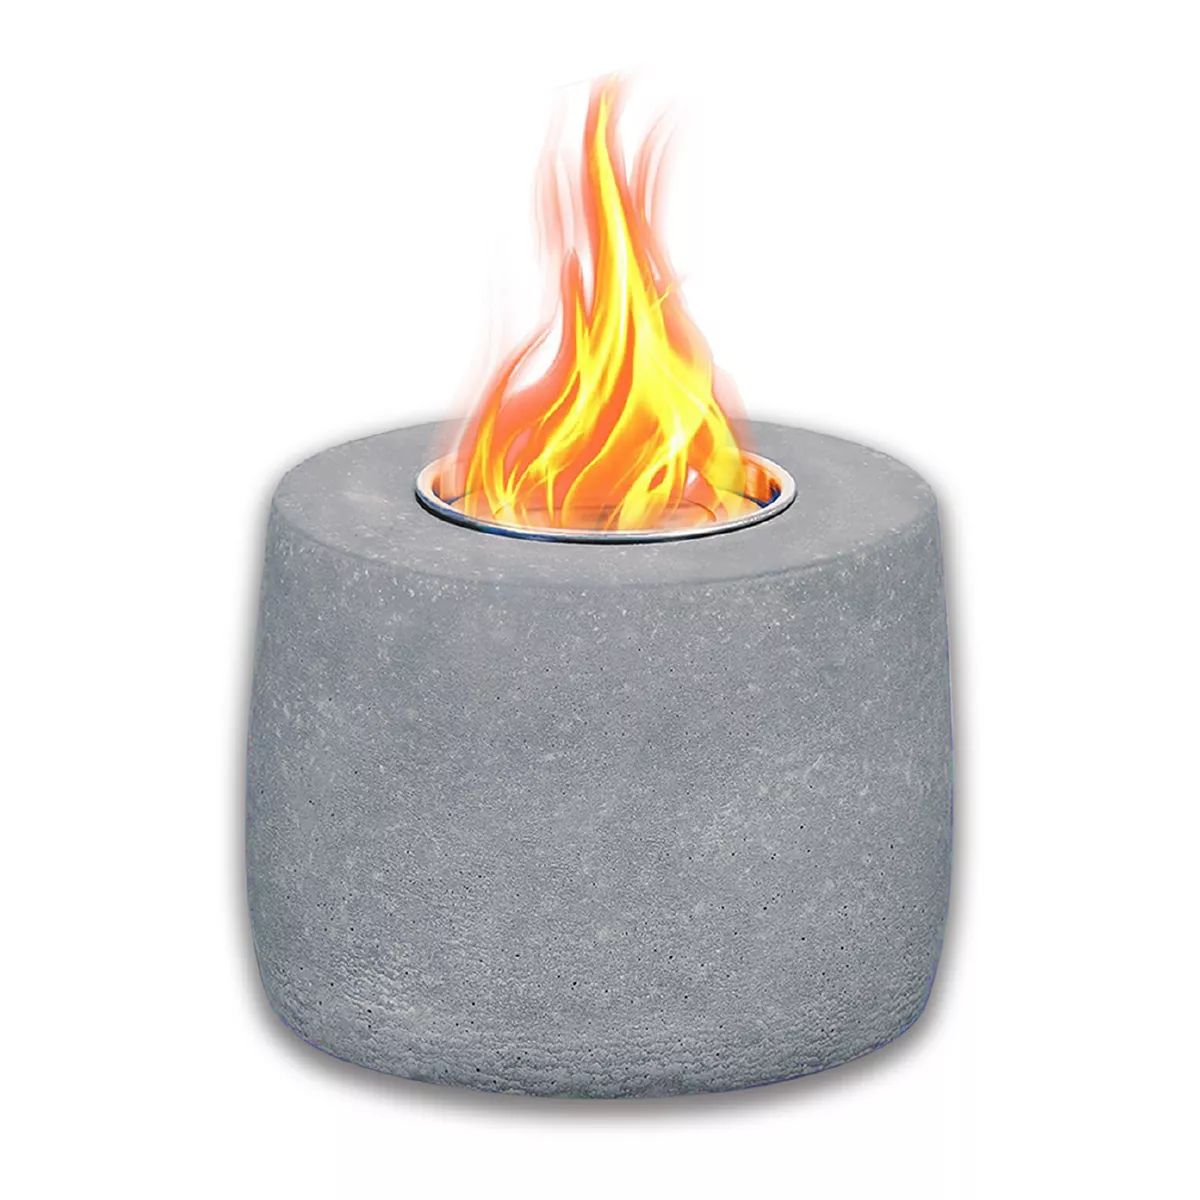 Samsonico Mini Smokeless Tabletop Bonfire | Kohl's